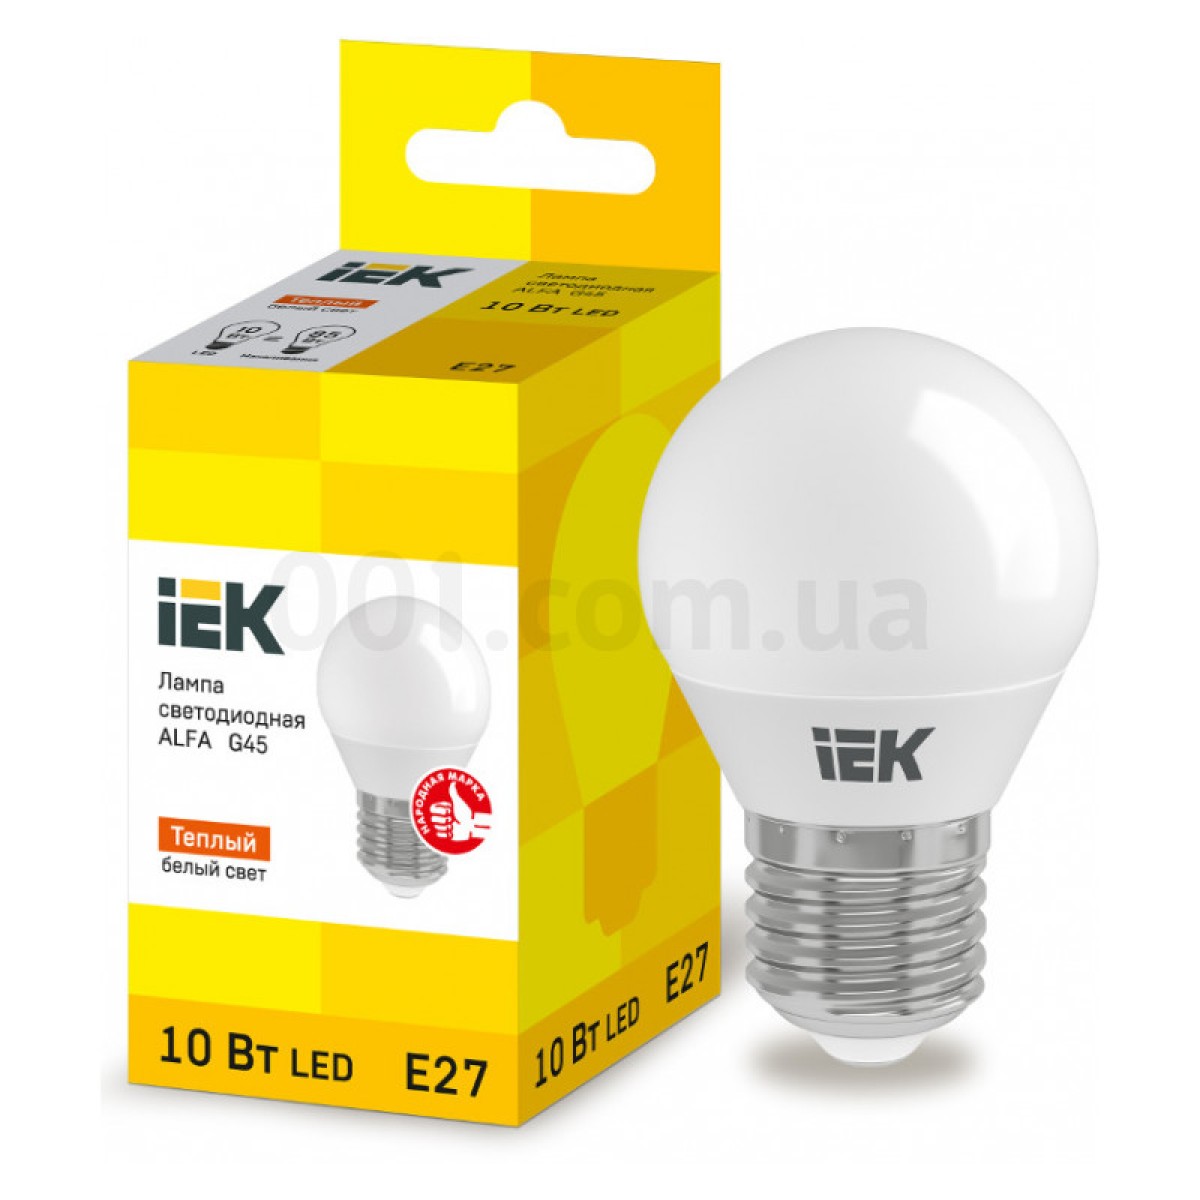 Светодиодная лампа LED ALFA G45 (шар) 10 Вт 230В 3000К E27, IEK 256_256.jpg